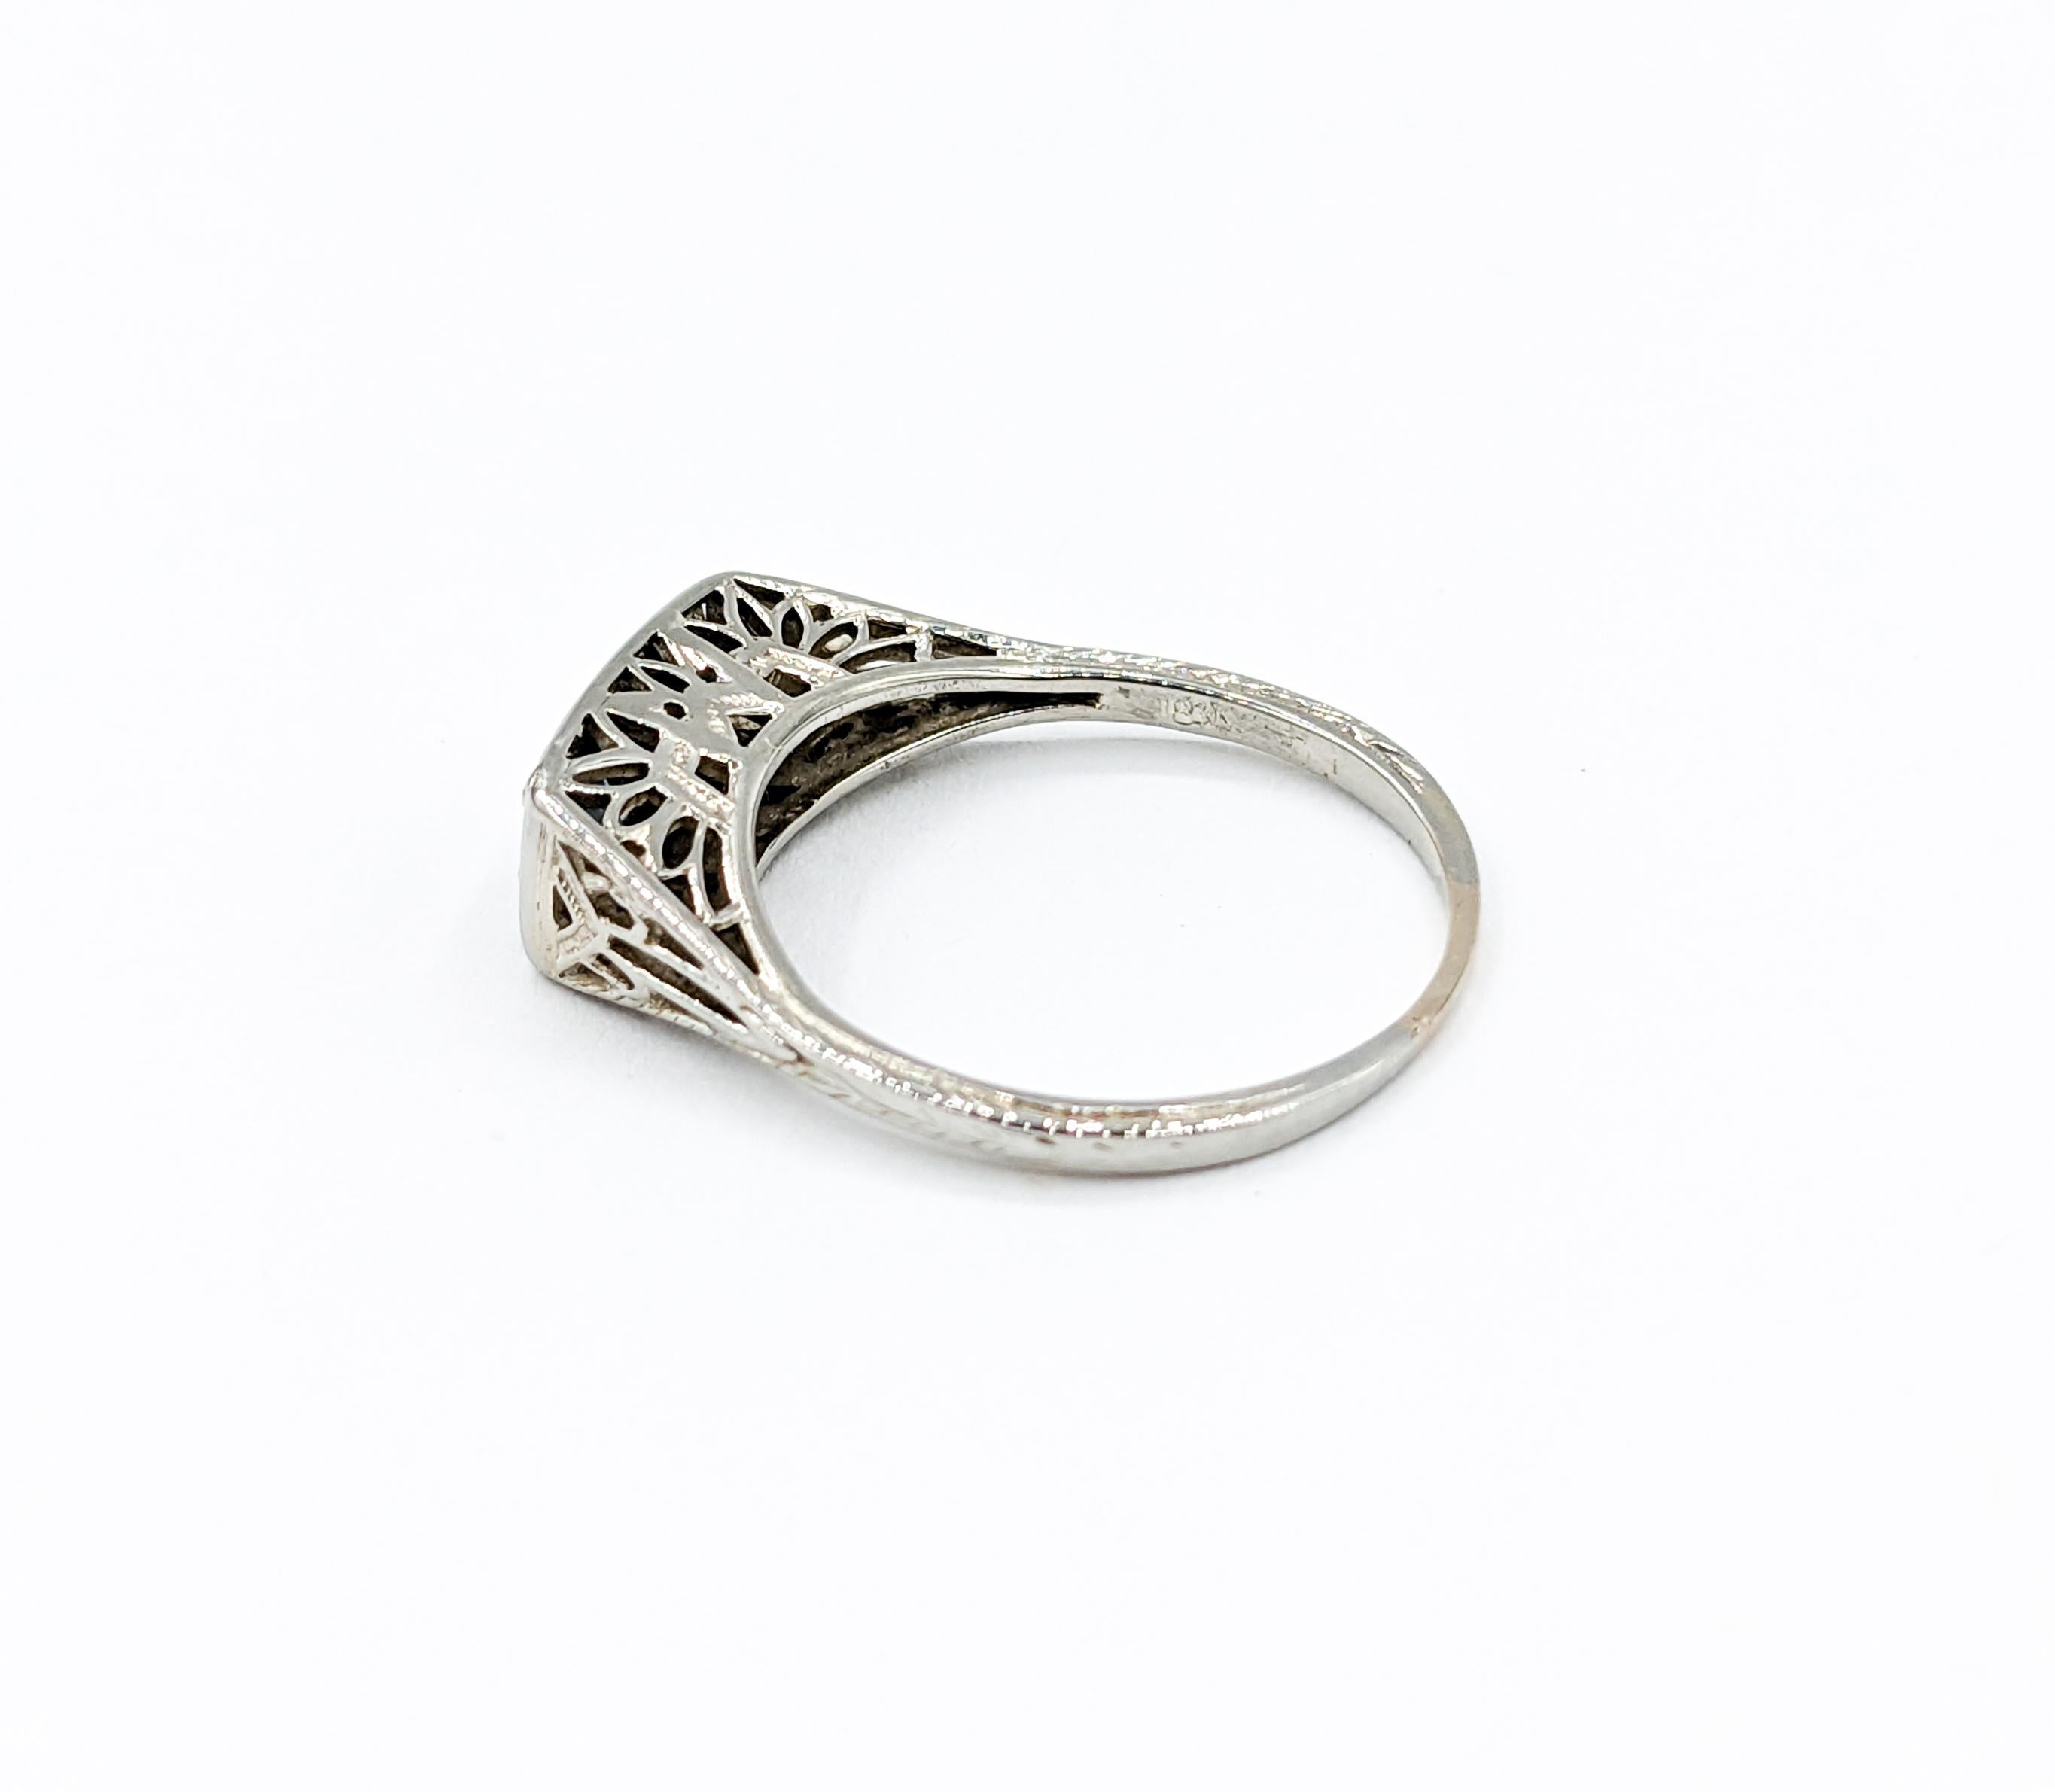 Wonderful Art Deco Color Change Alexandrite Ring in 18Kt White Gold 5